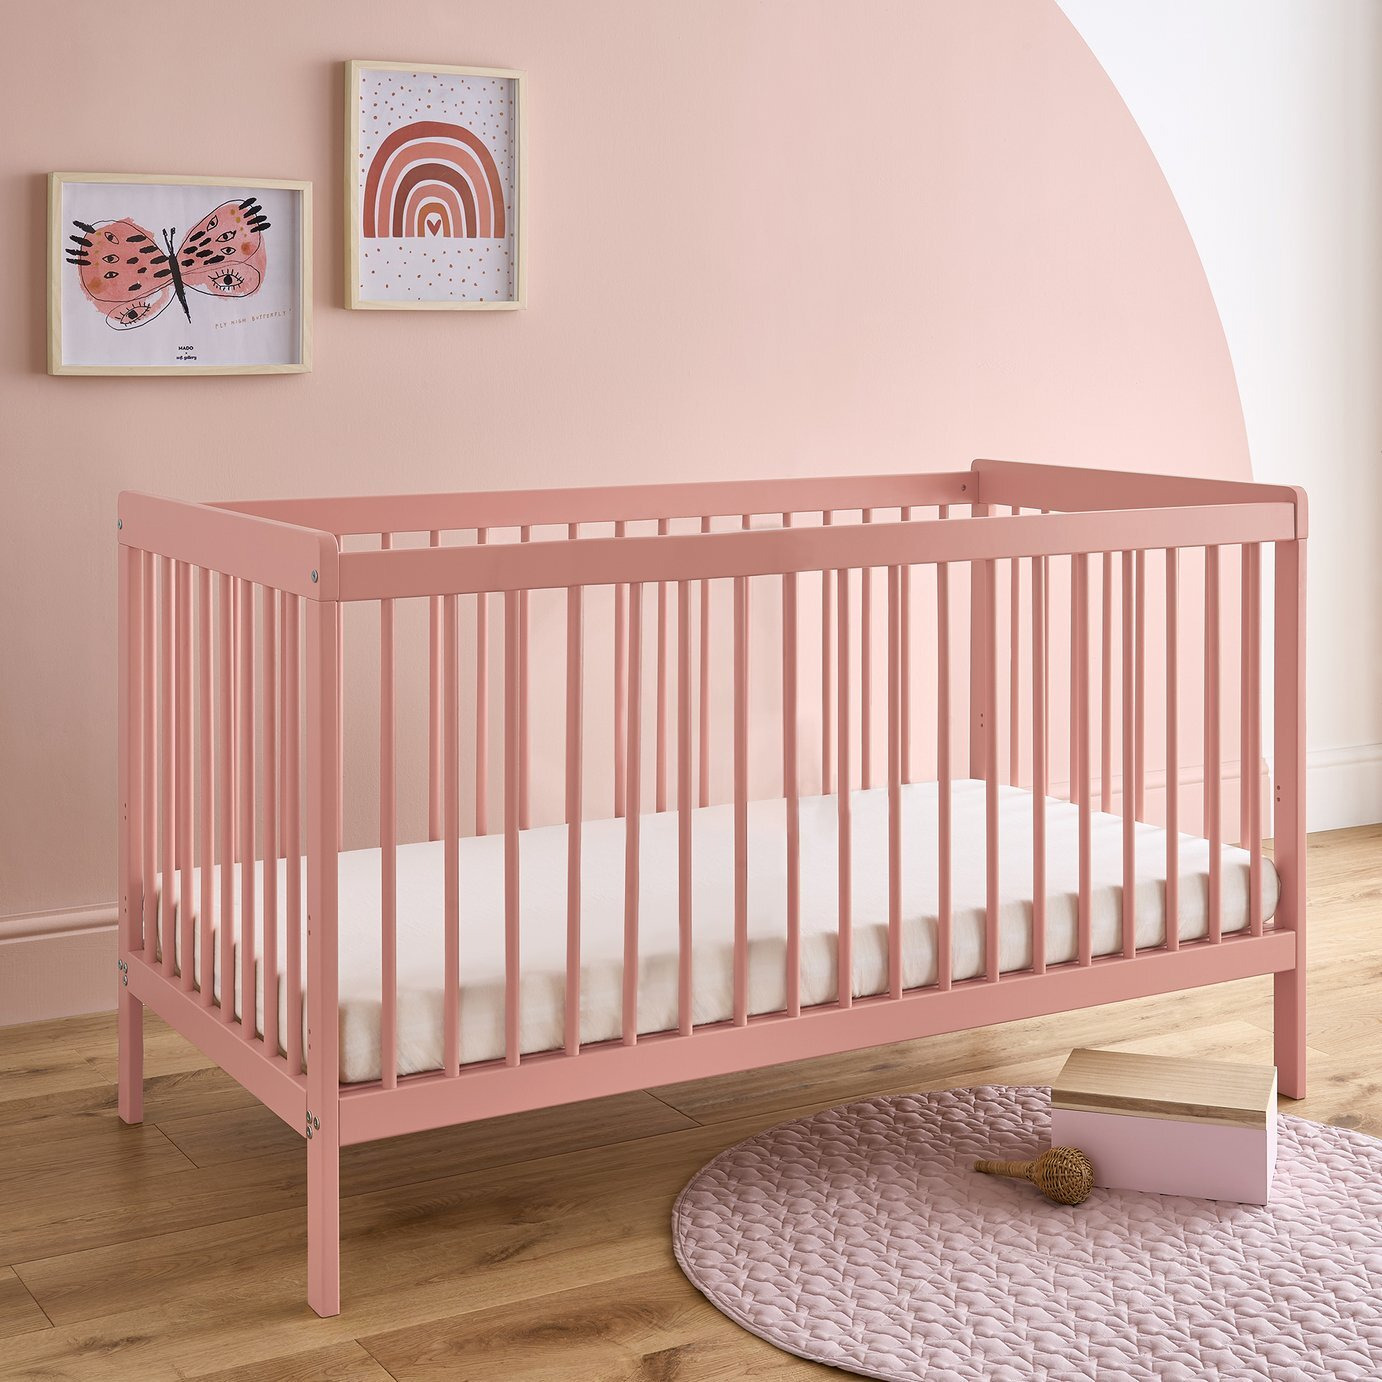 Cuddleco Nola Cot Bed - Pink - image 1